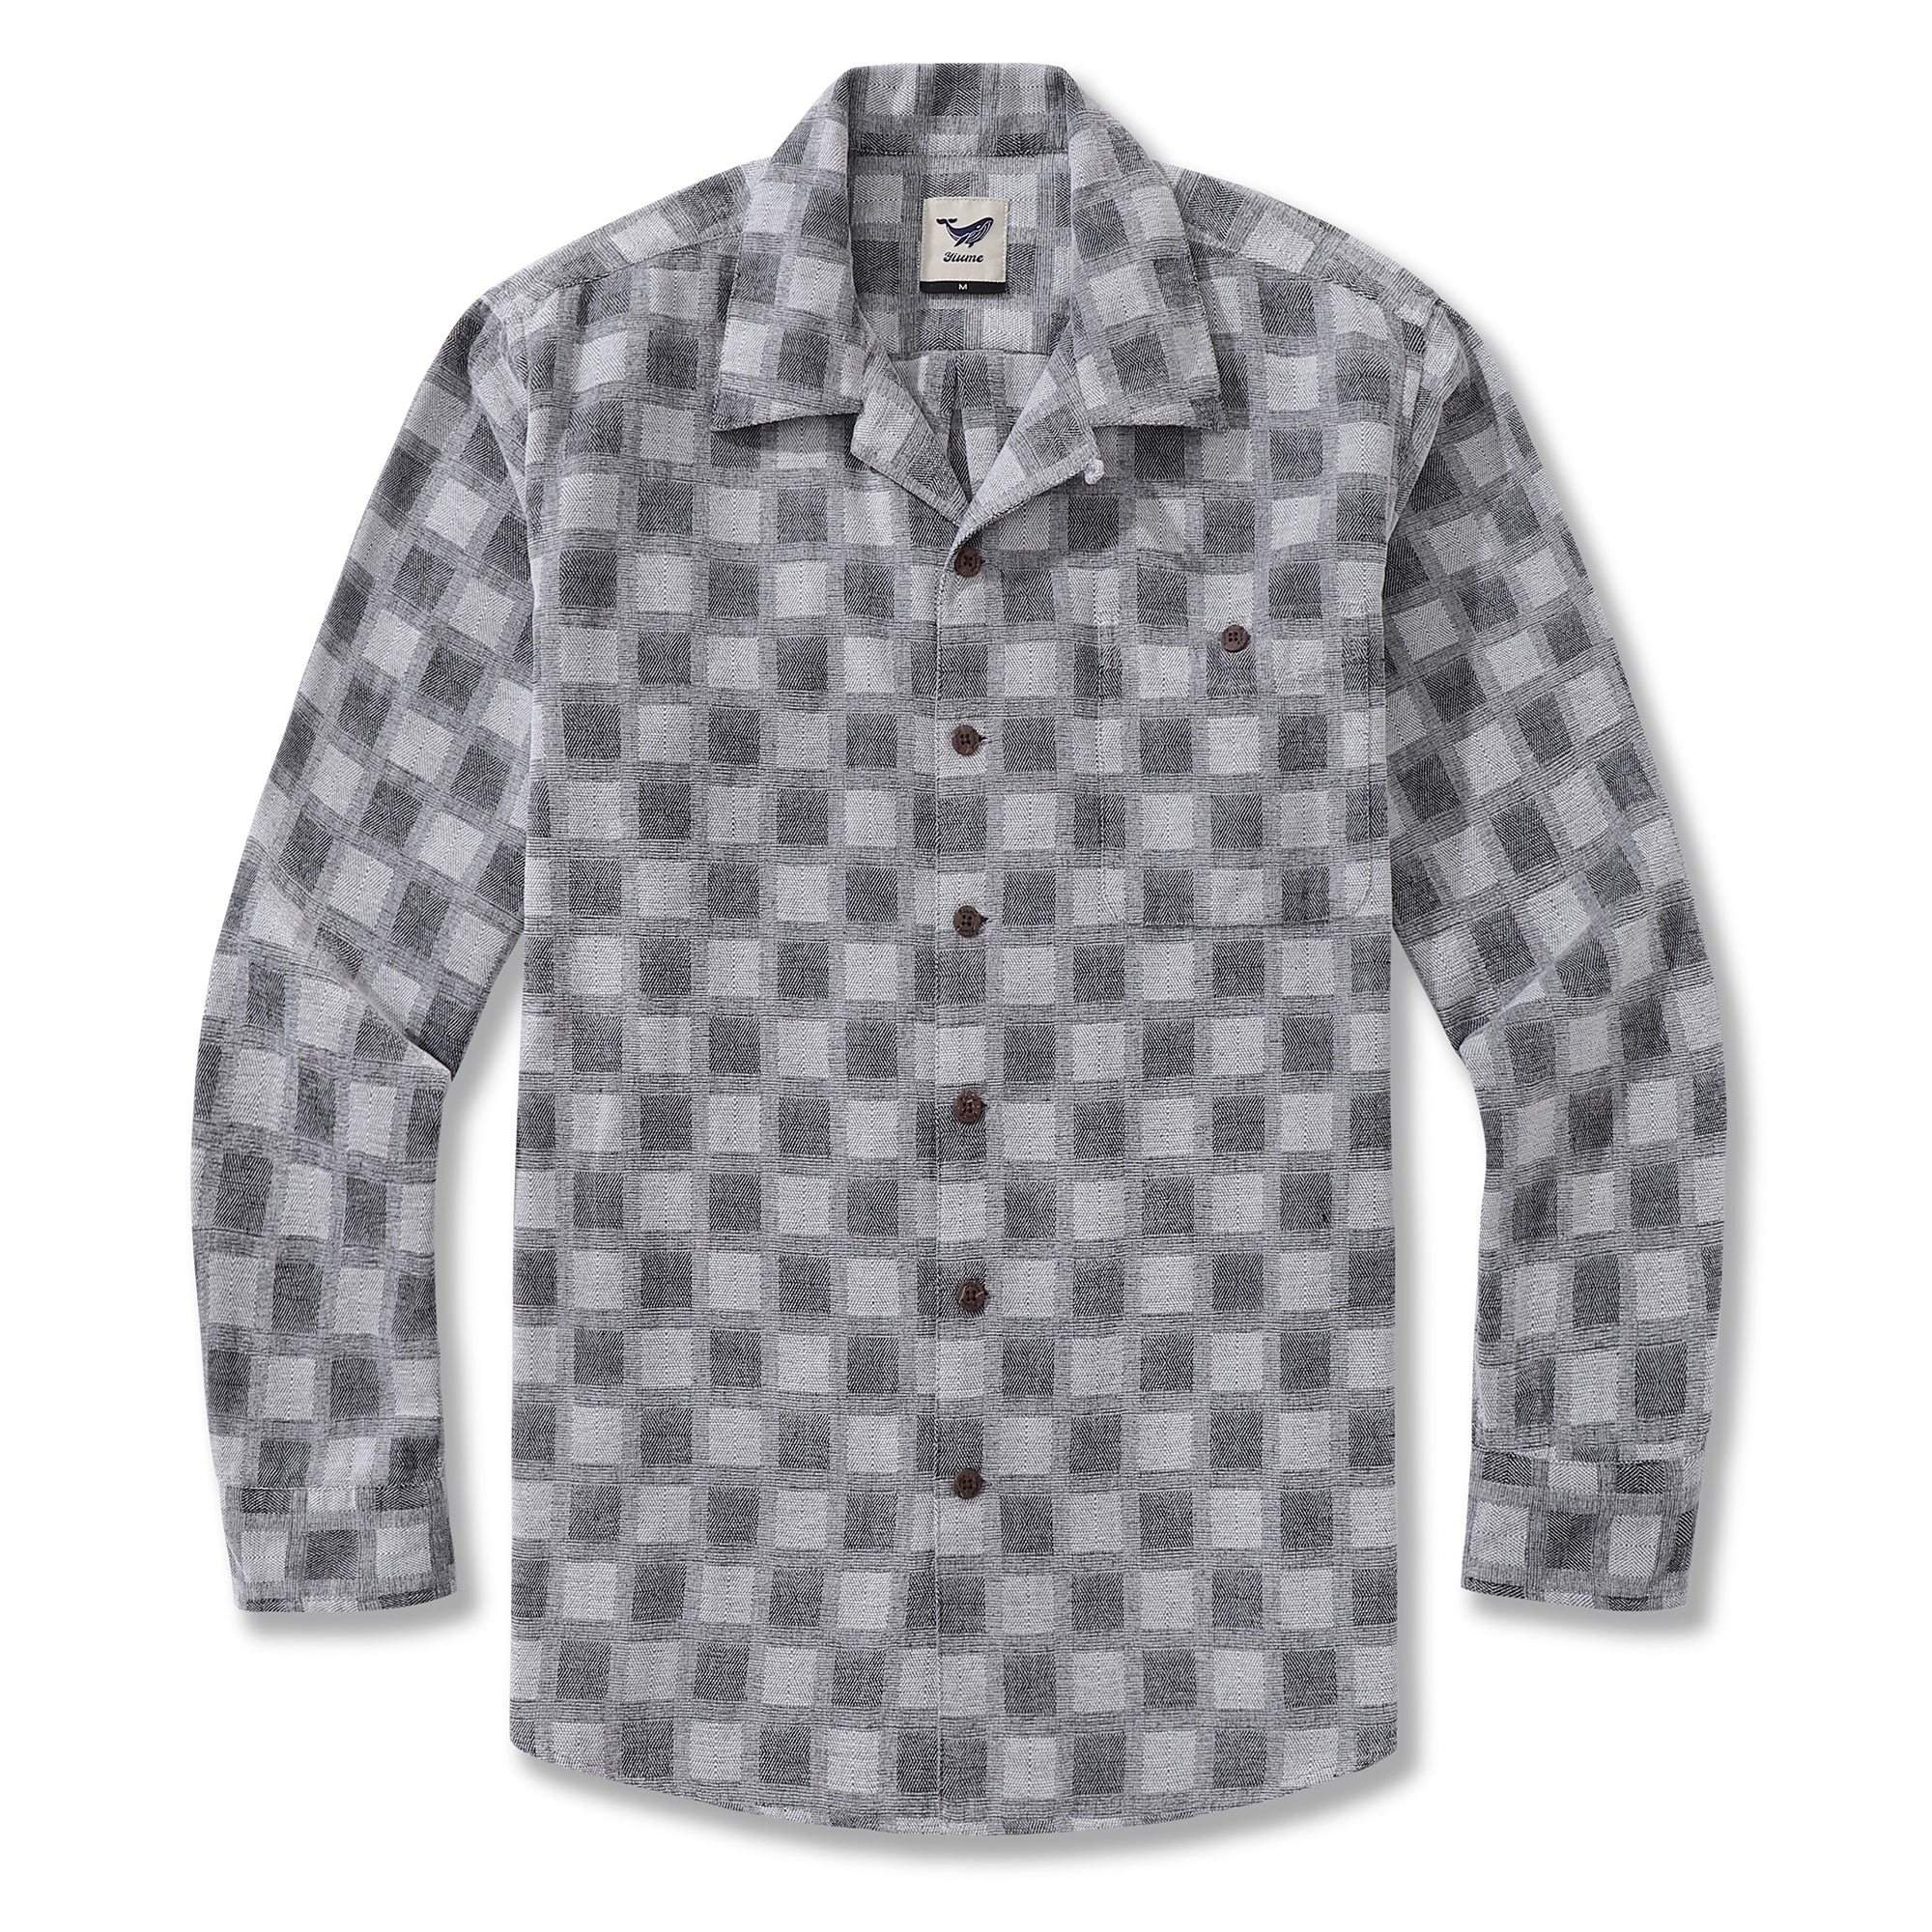 Men's Hawaiian Shirt Cotton Camp Collar Long Sleeve Classic Check Shirt - GRAY